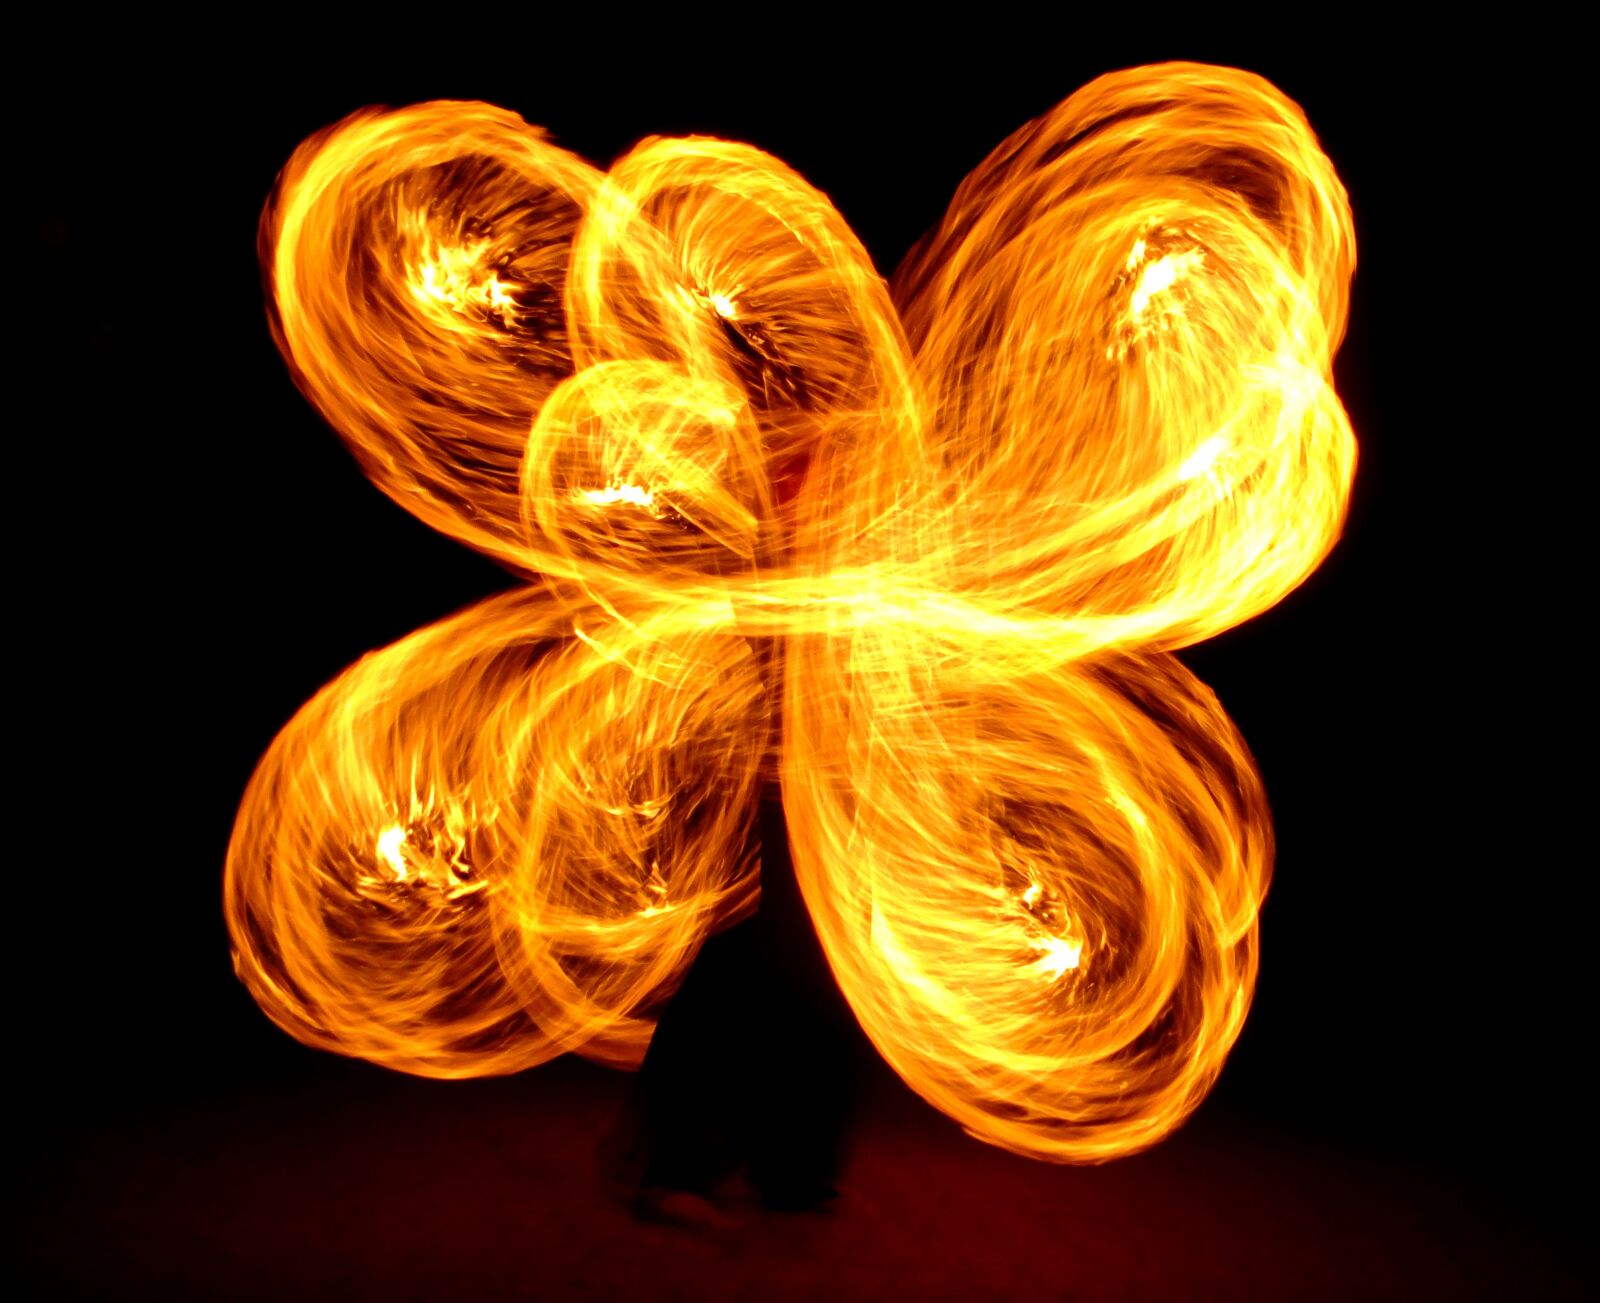 Sony Cyber-shot DSC-TX5 sample photo. Fire, fire flower, flame photography